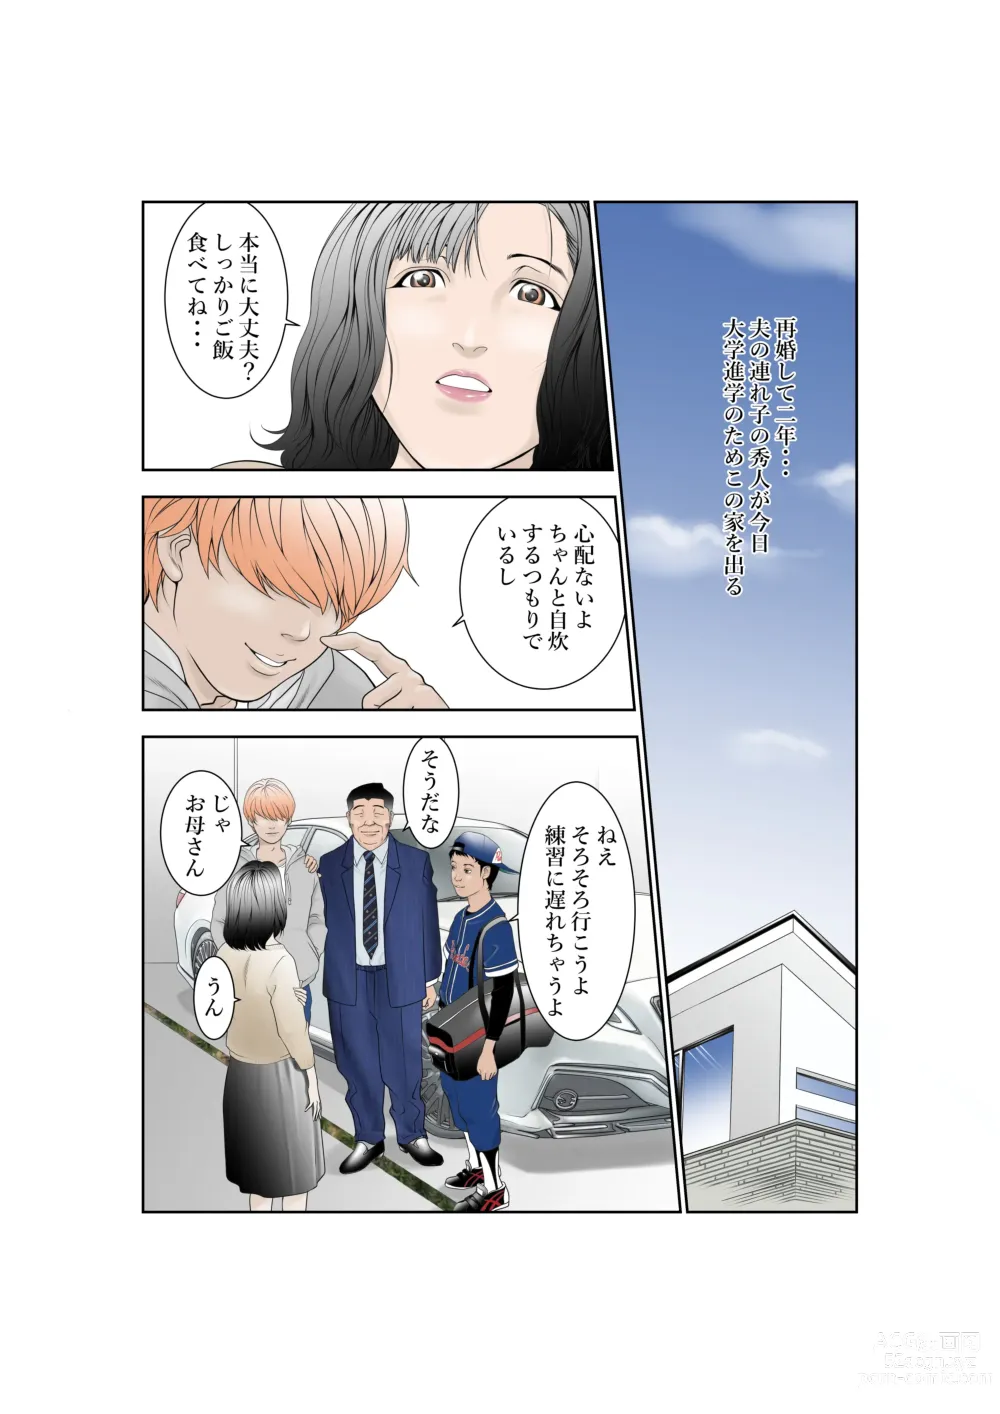 Page 2 of doujinshi Shiawase Kazoku no Sodate kata